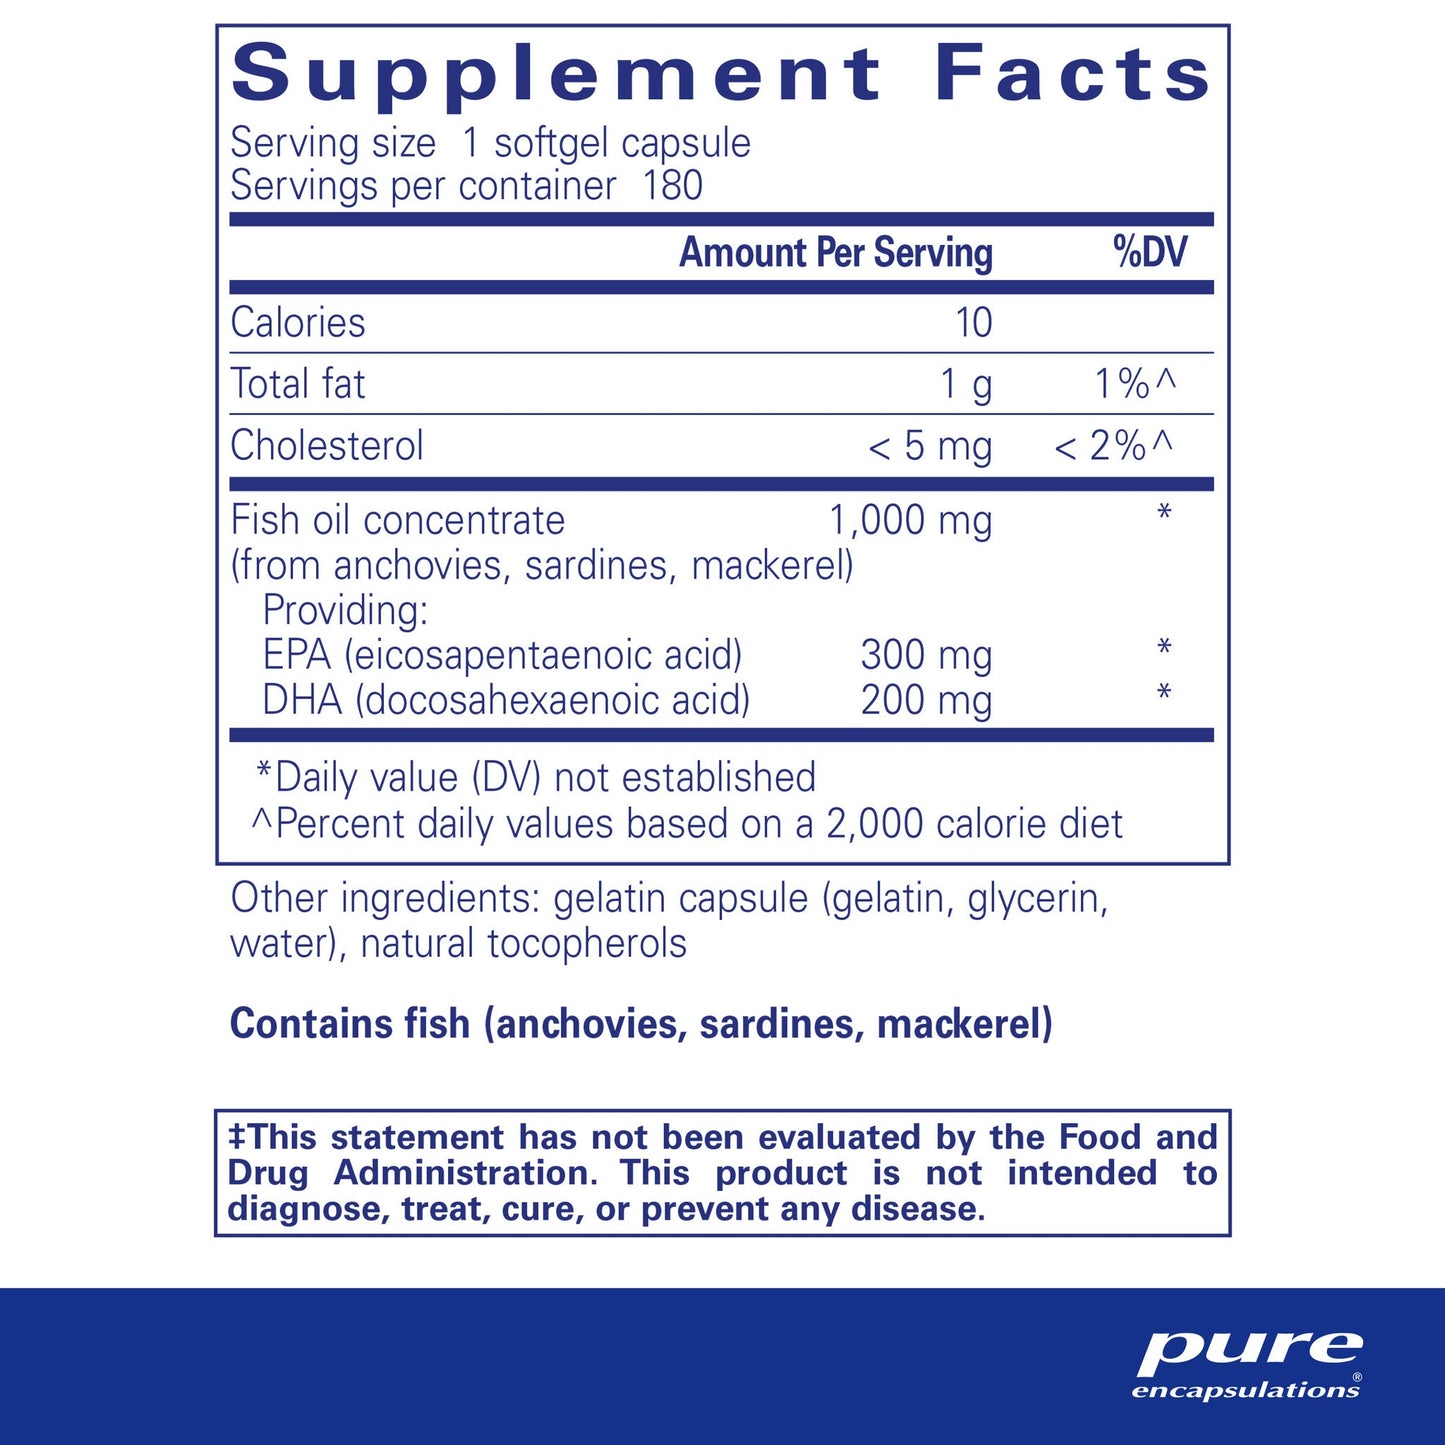 EPA/DHA essentials 1,000 mg.